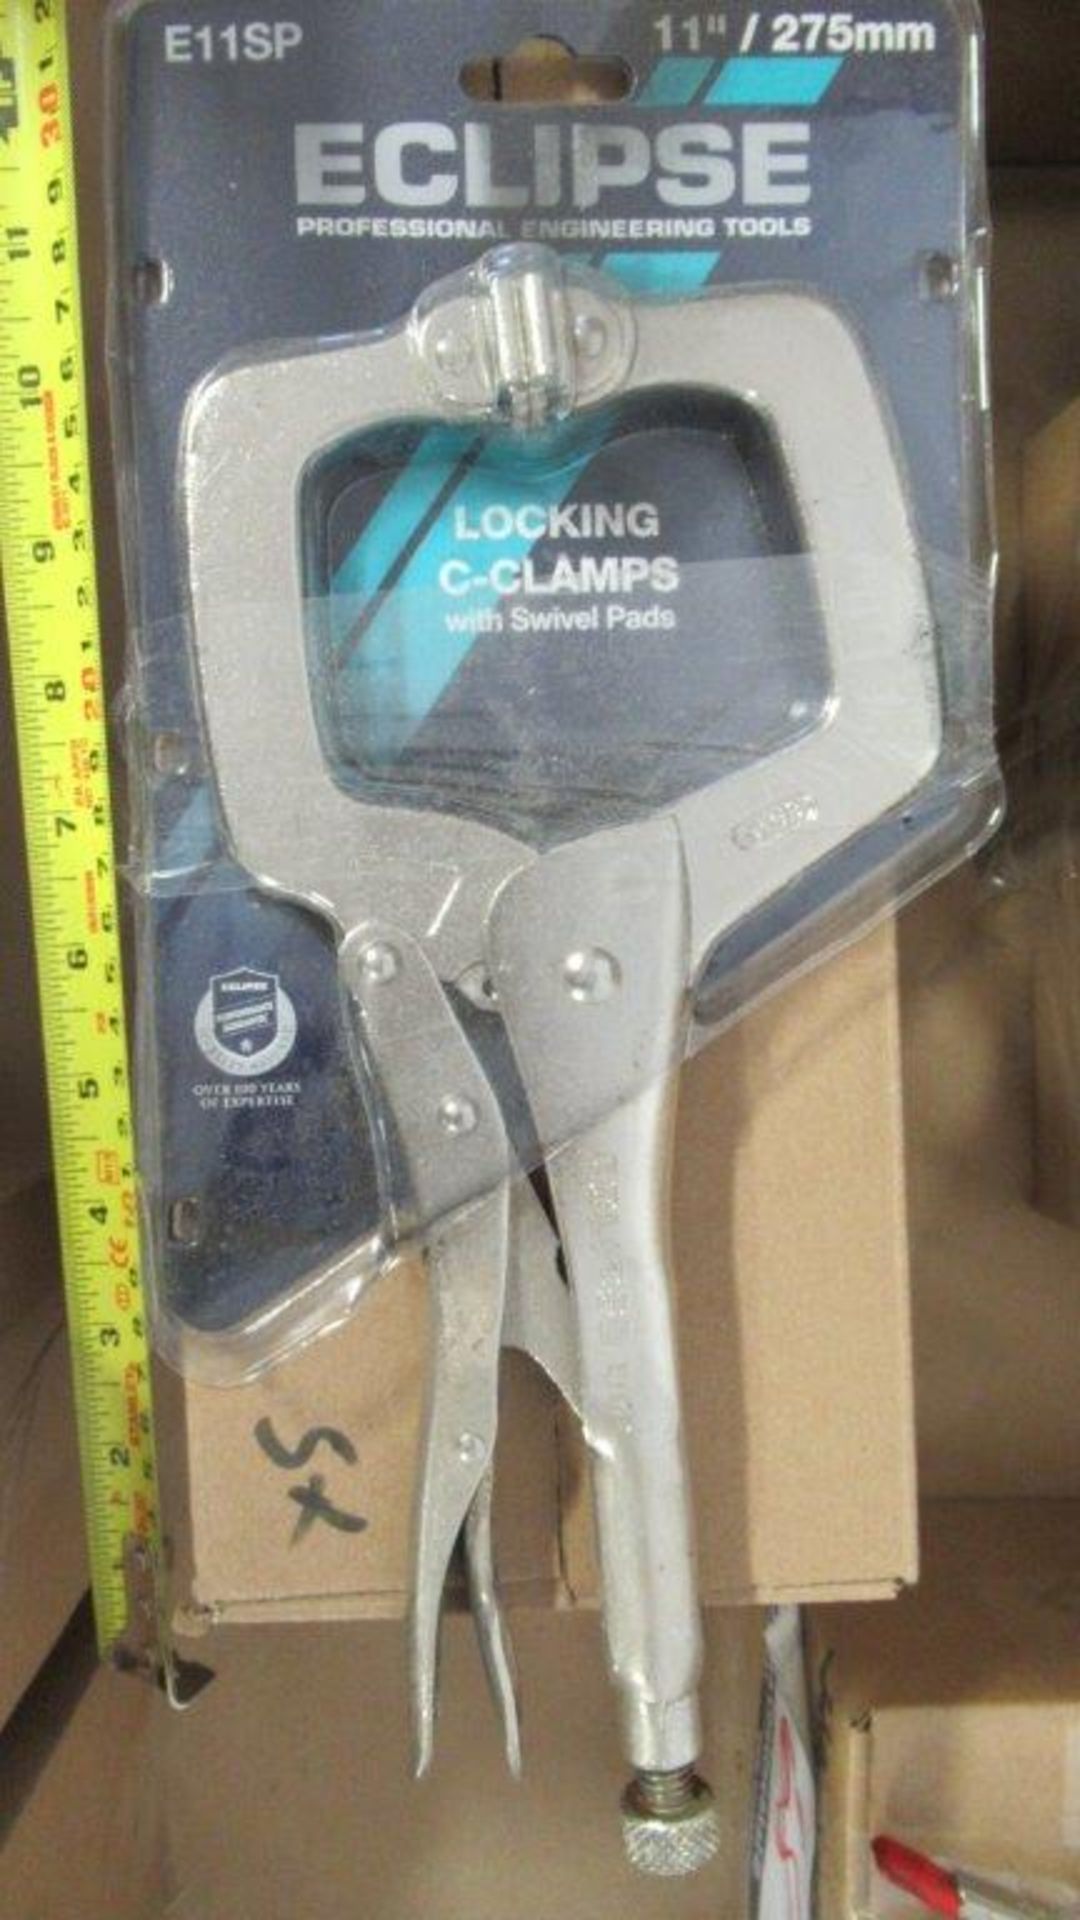 LOCKING C-CLAMPS, 11''/275 mm, ECLIPSE E11SP